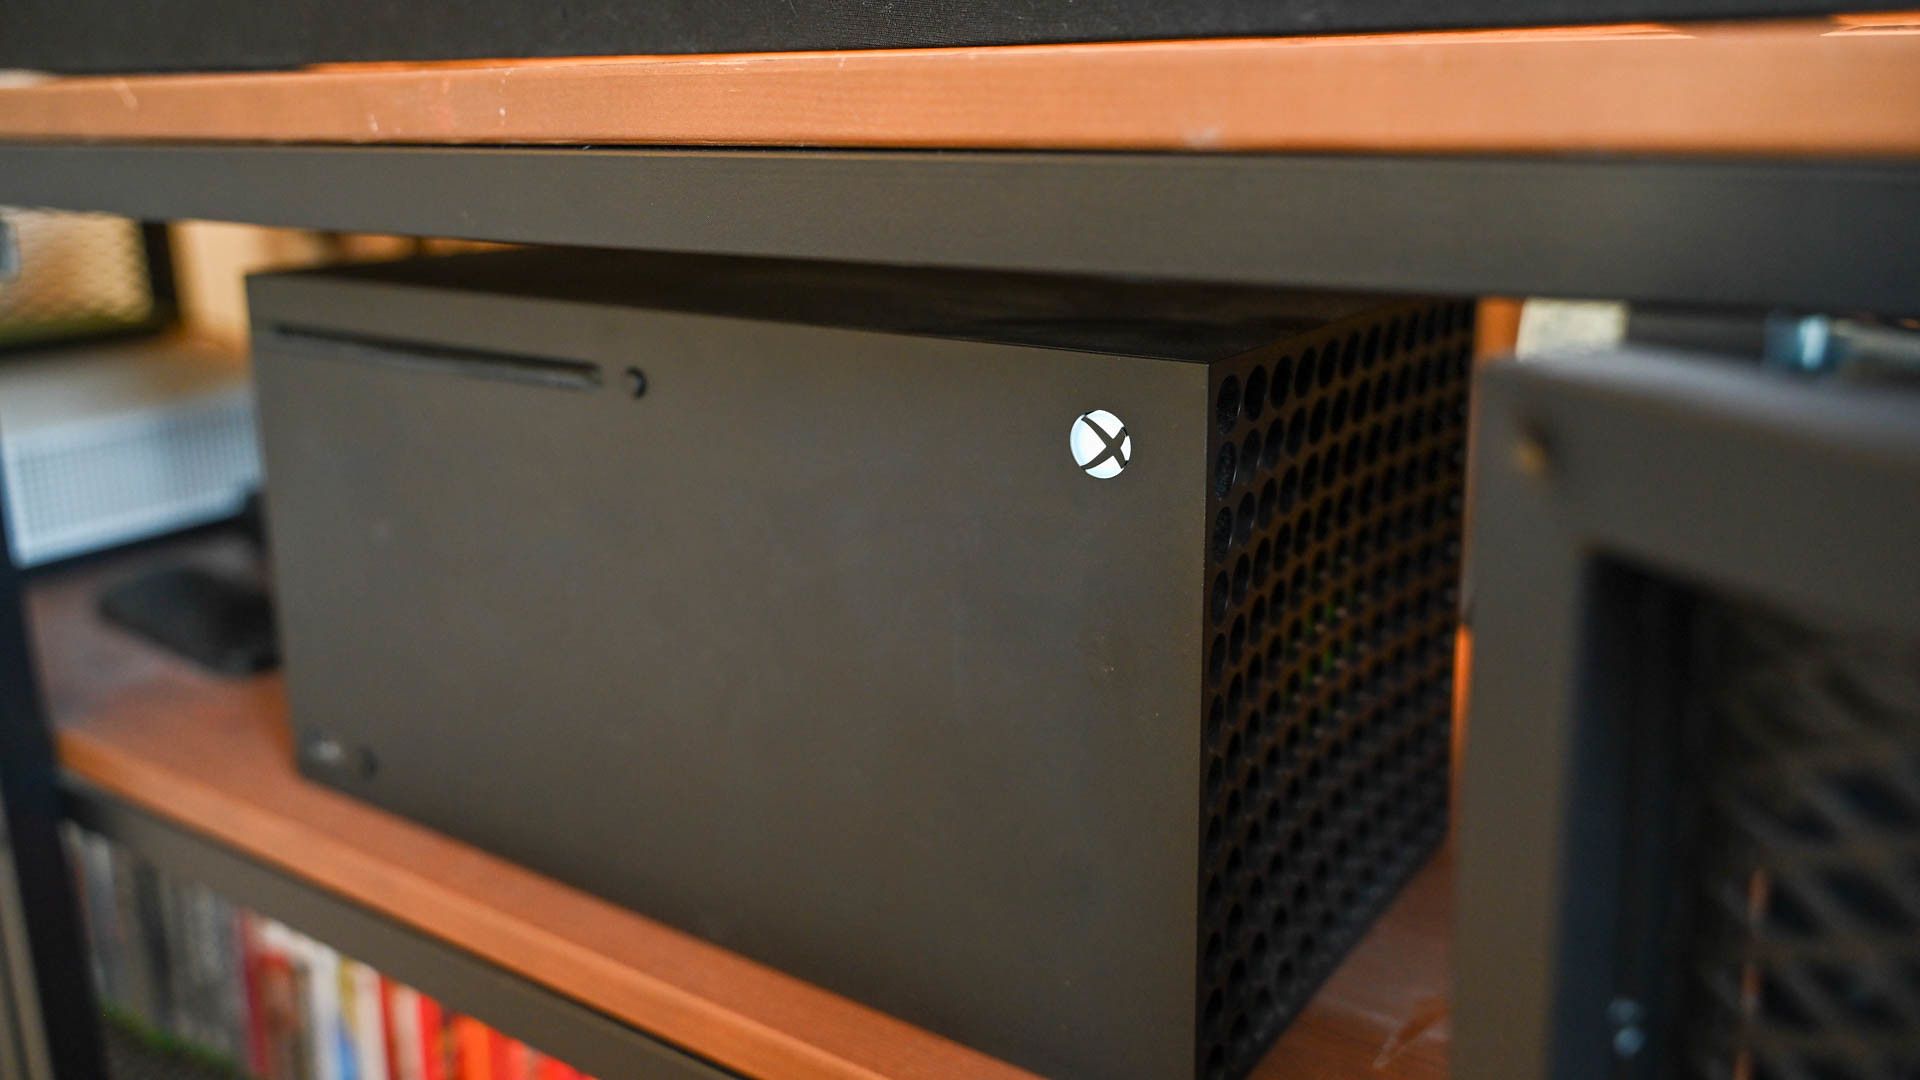 An Xbox Series X console on a shelf.